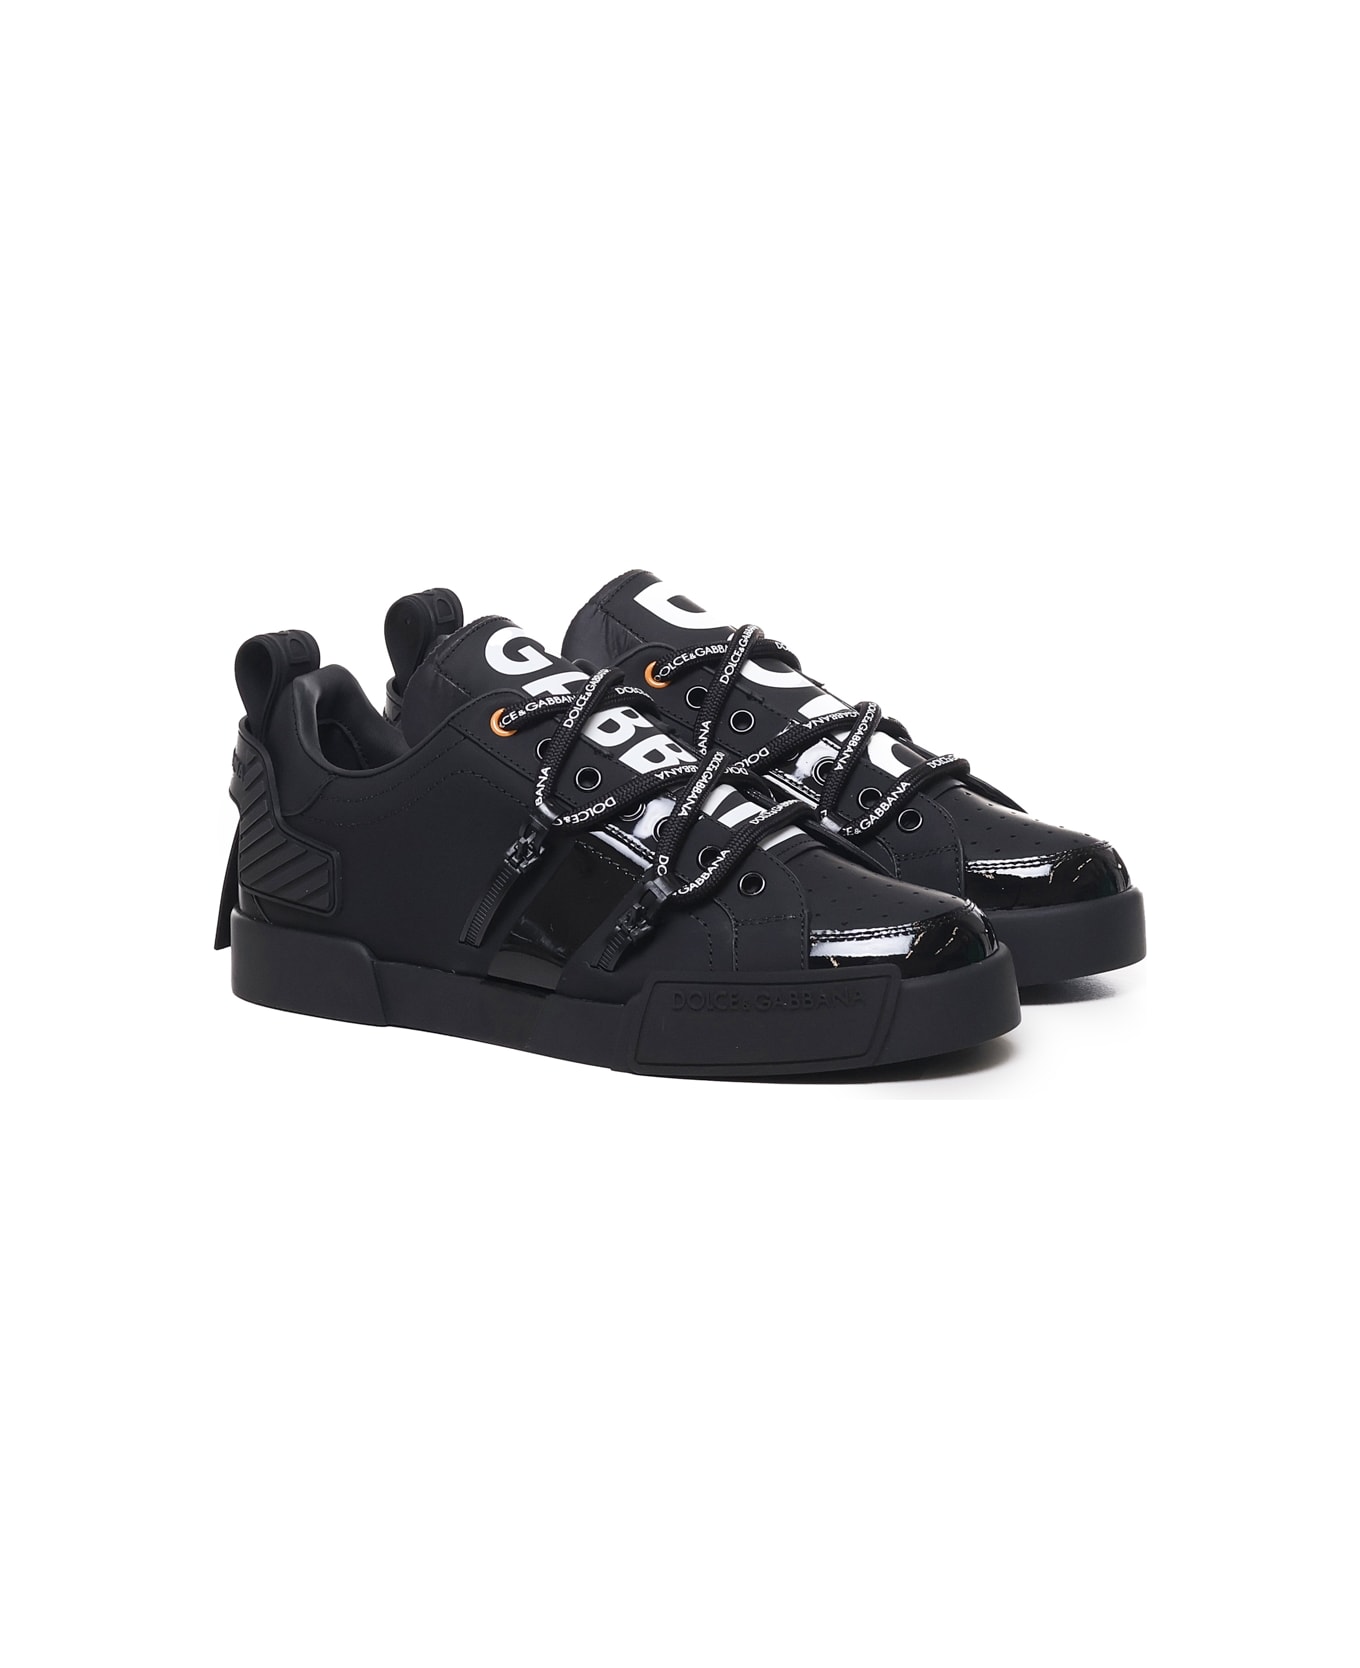 Dolce & Gabbana Portofino Leather And Patent Leather Sneakers - Black